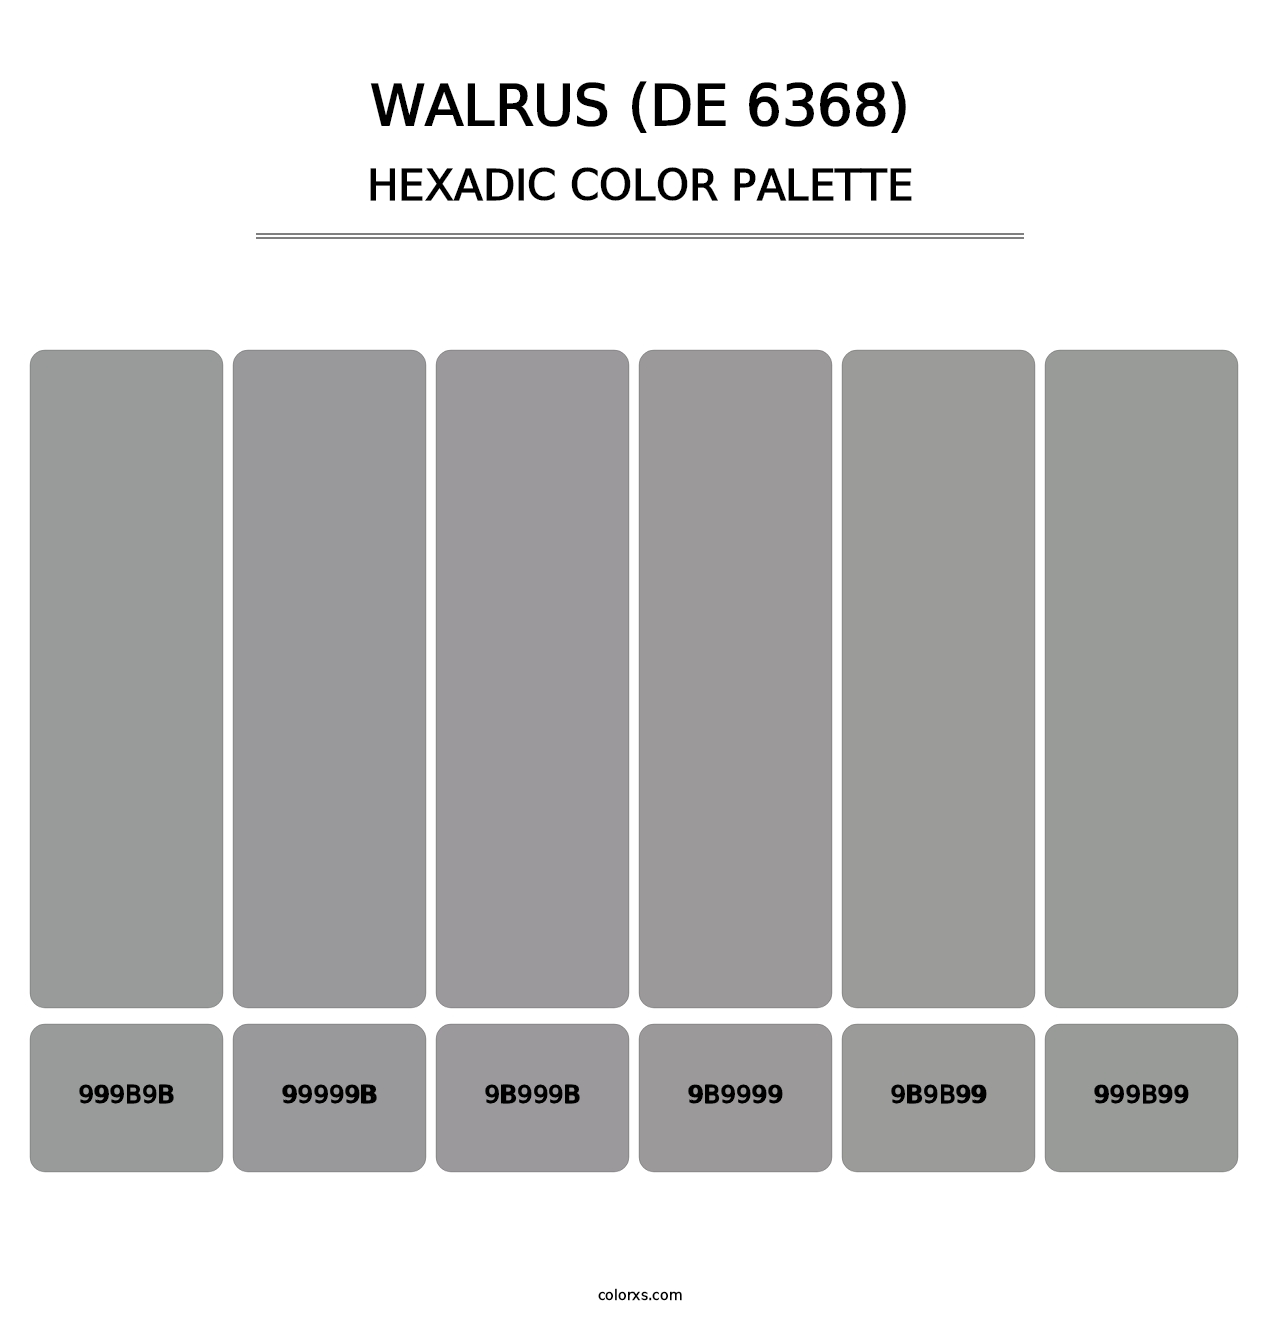 Walrus (DE 6368) - Hexadic Color Palette